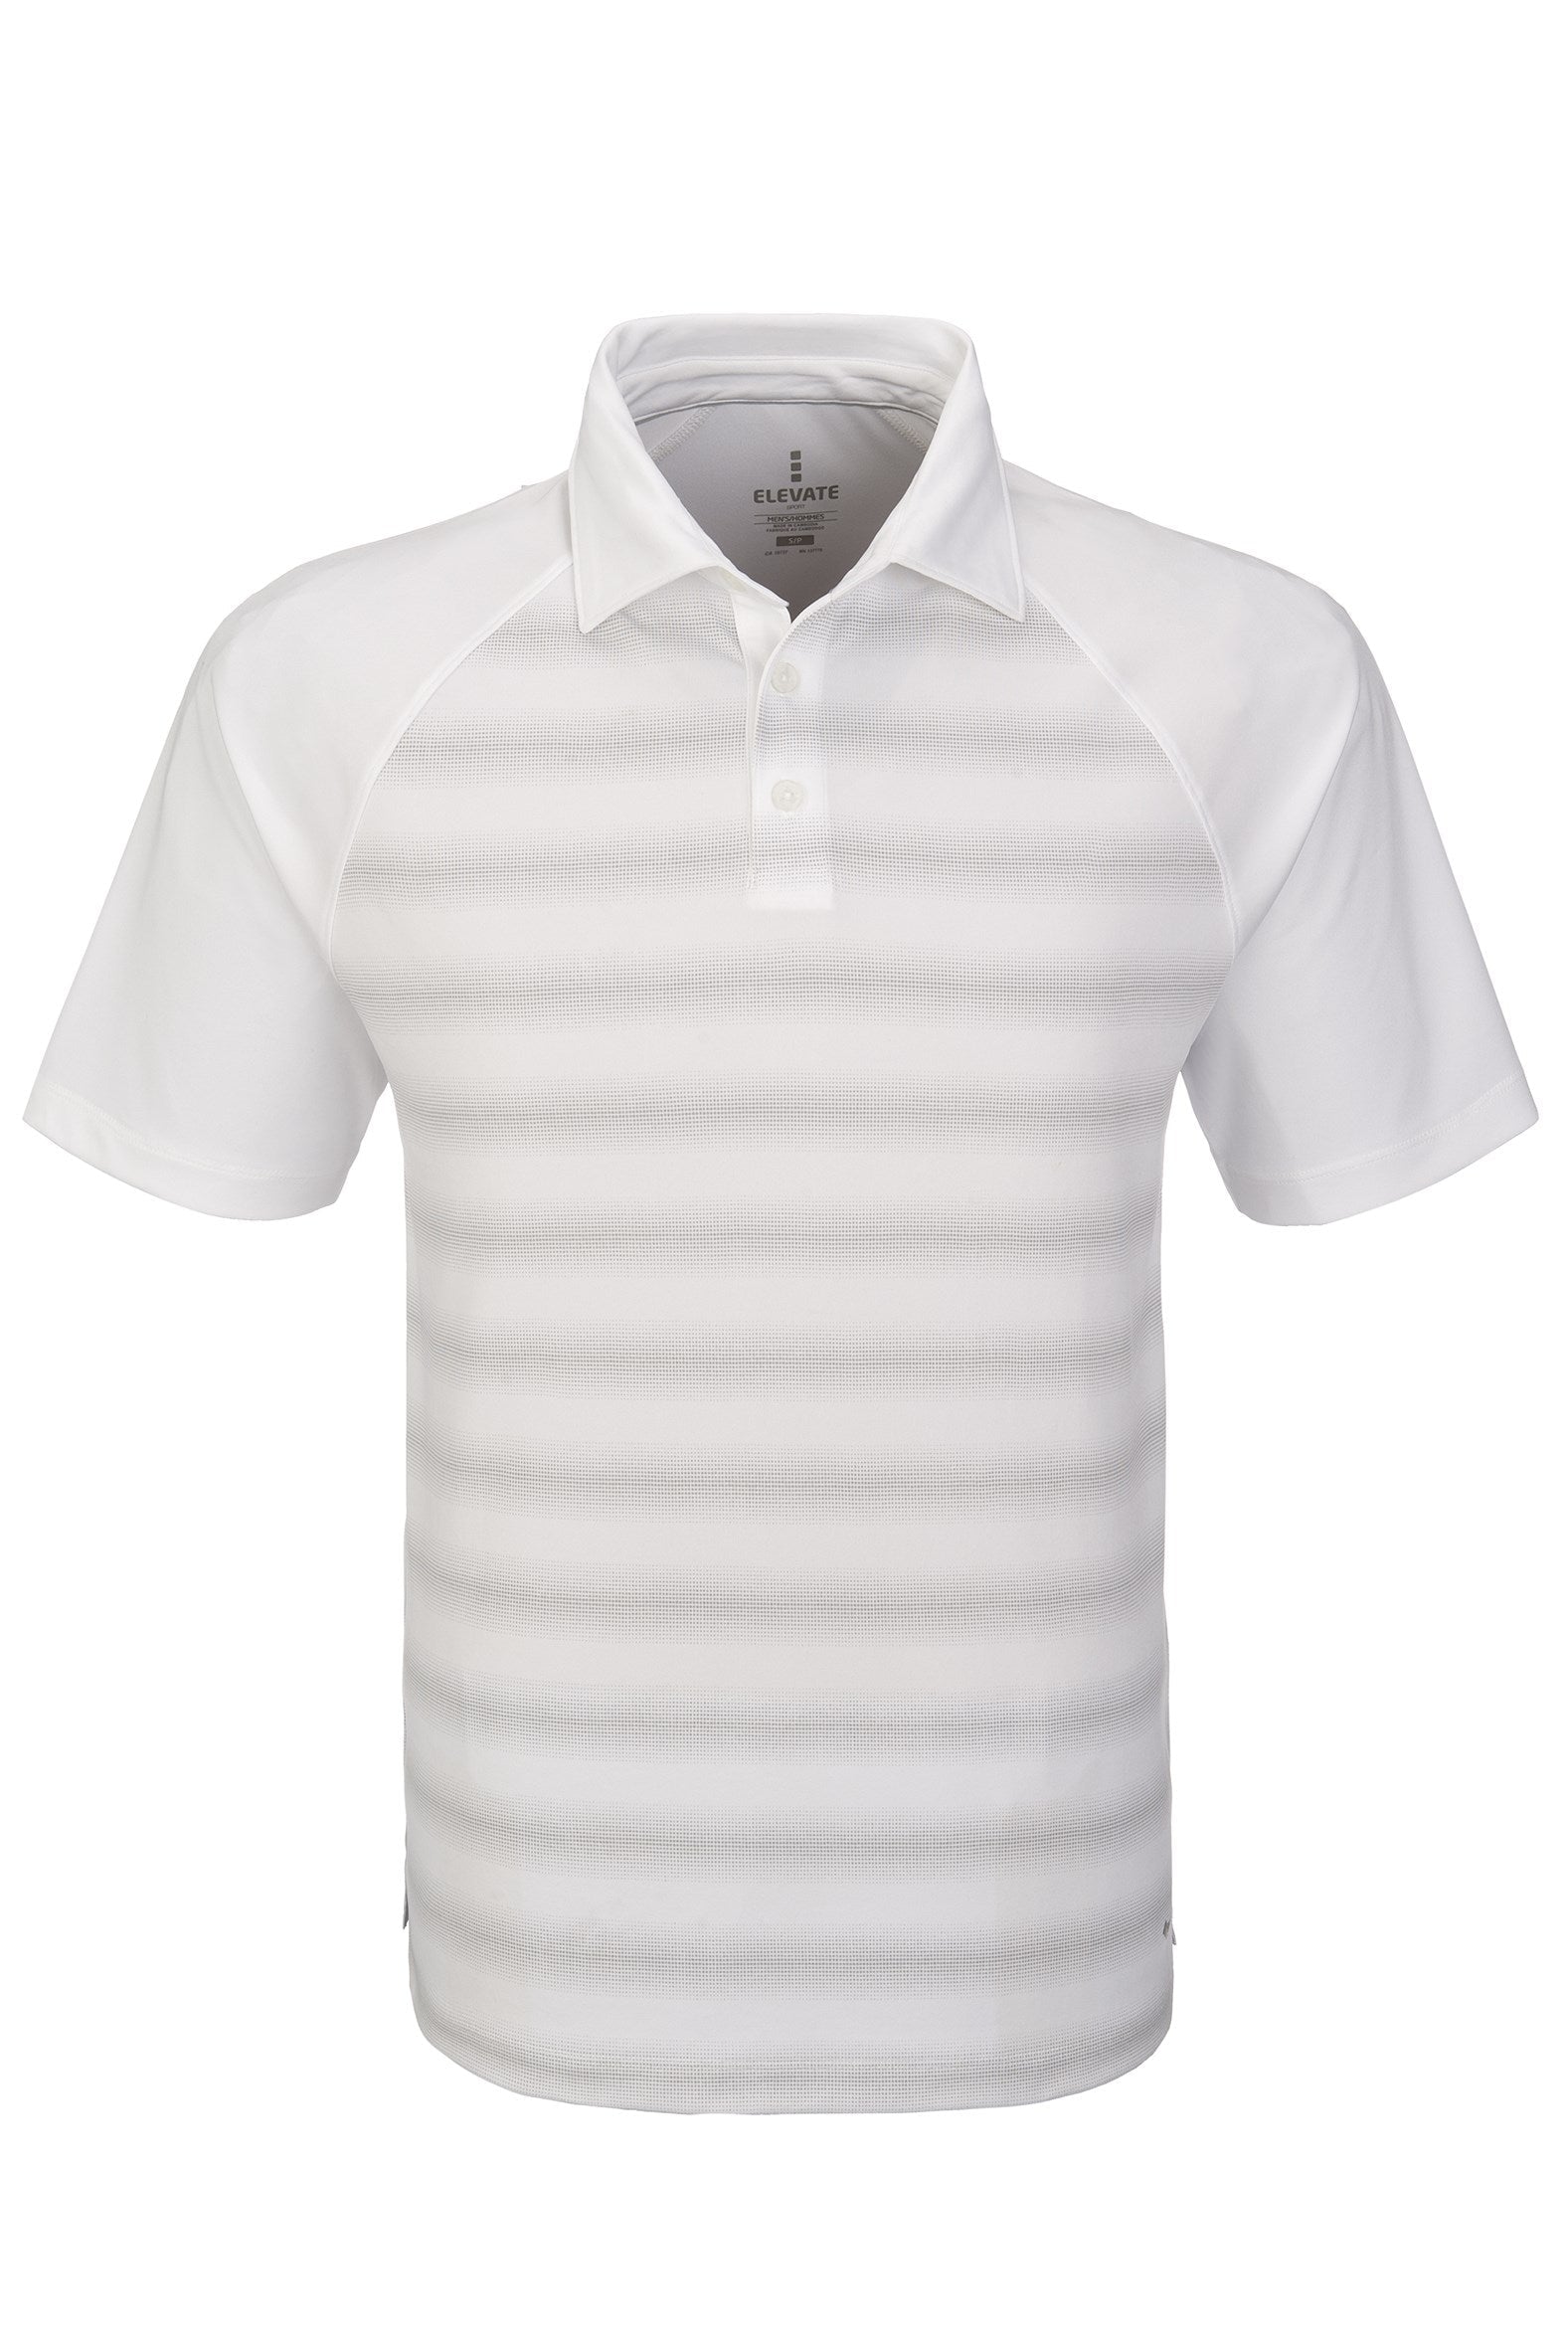 Mens Shimmer Golf Shirt - Black Only-2XL-White-W